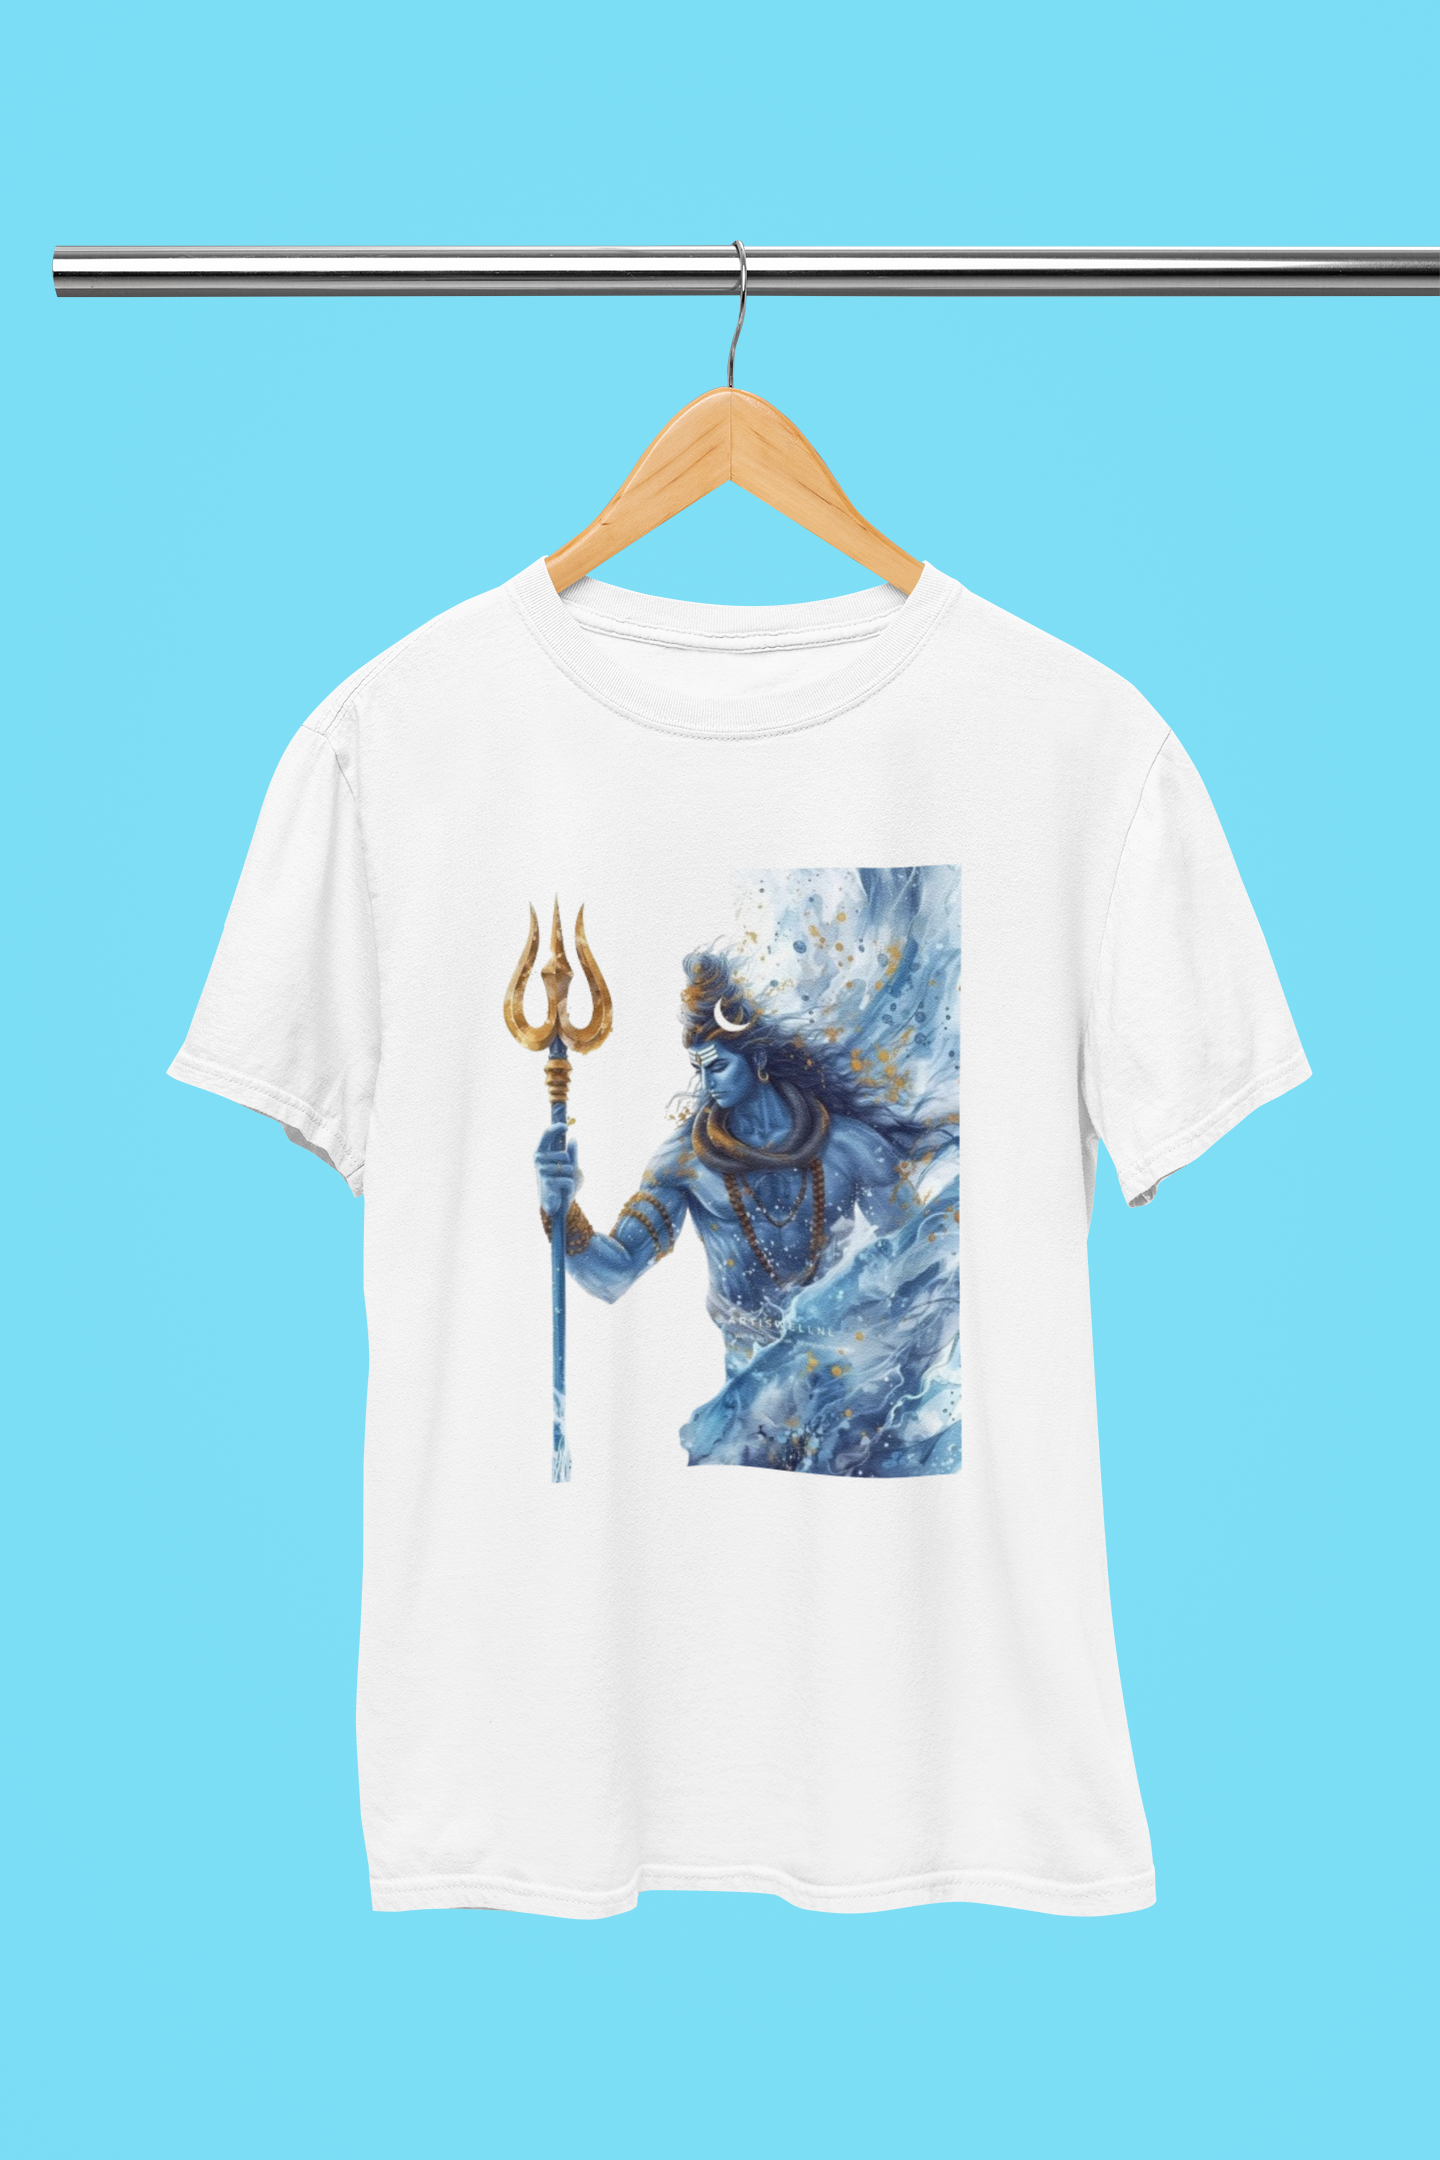 Lord Shiva Shivaratri Special T-Shirt